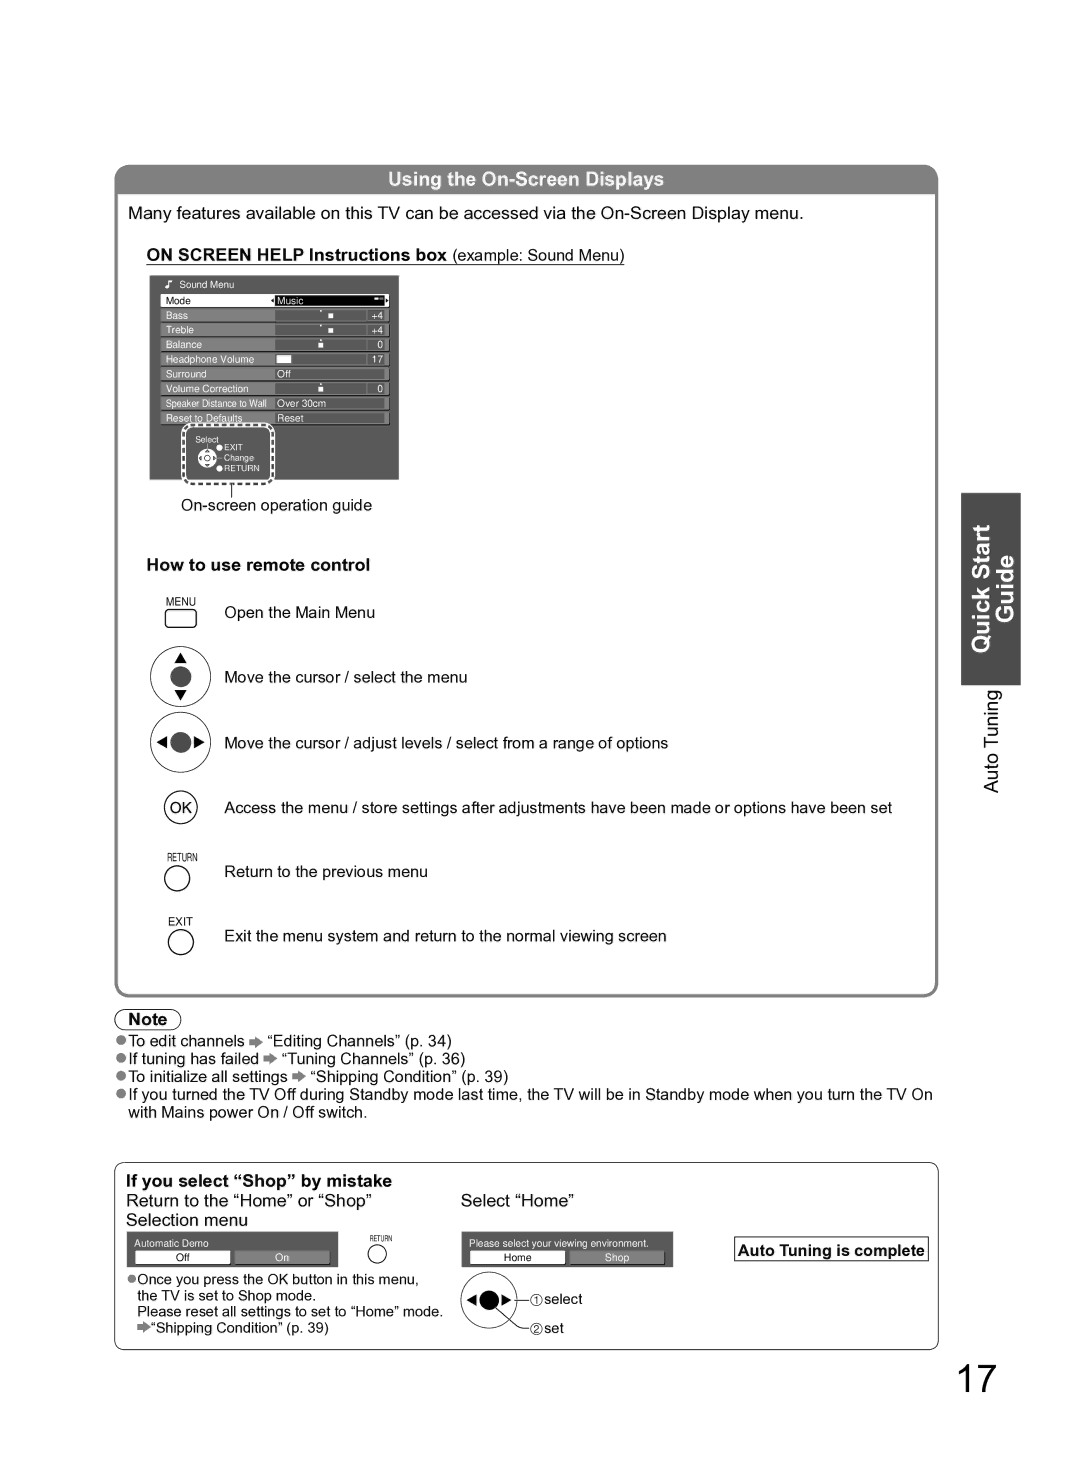 Panasonic TH-P54Z10H manual Using the On-Screen Displays, On Screen Help Instructions box example Sound Menu 